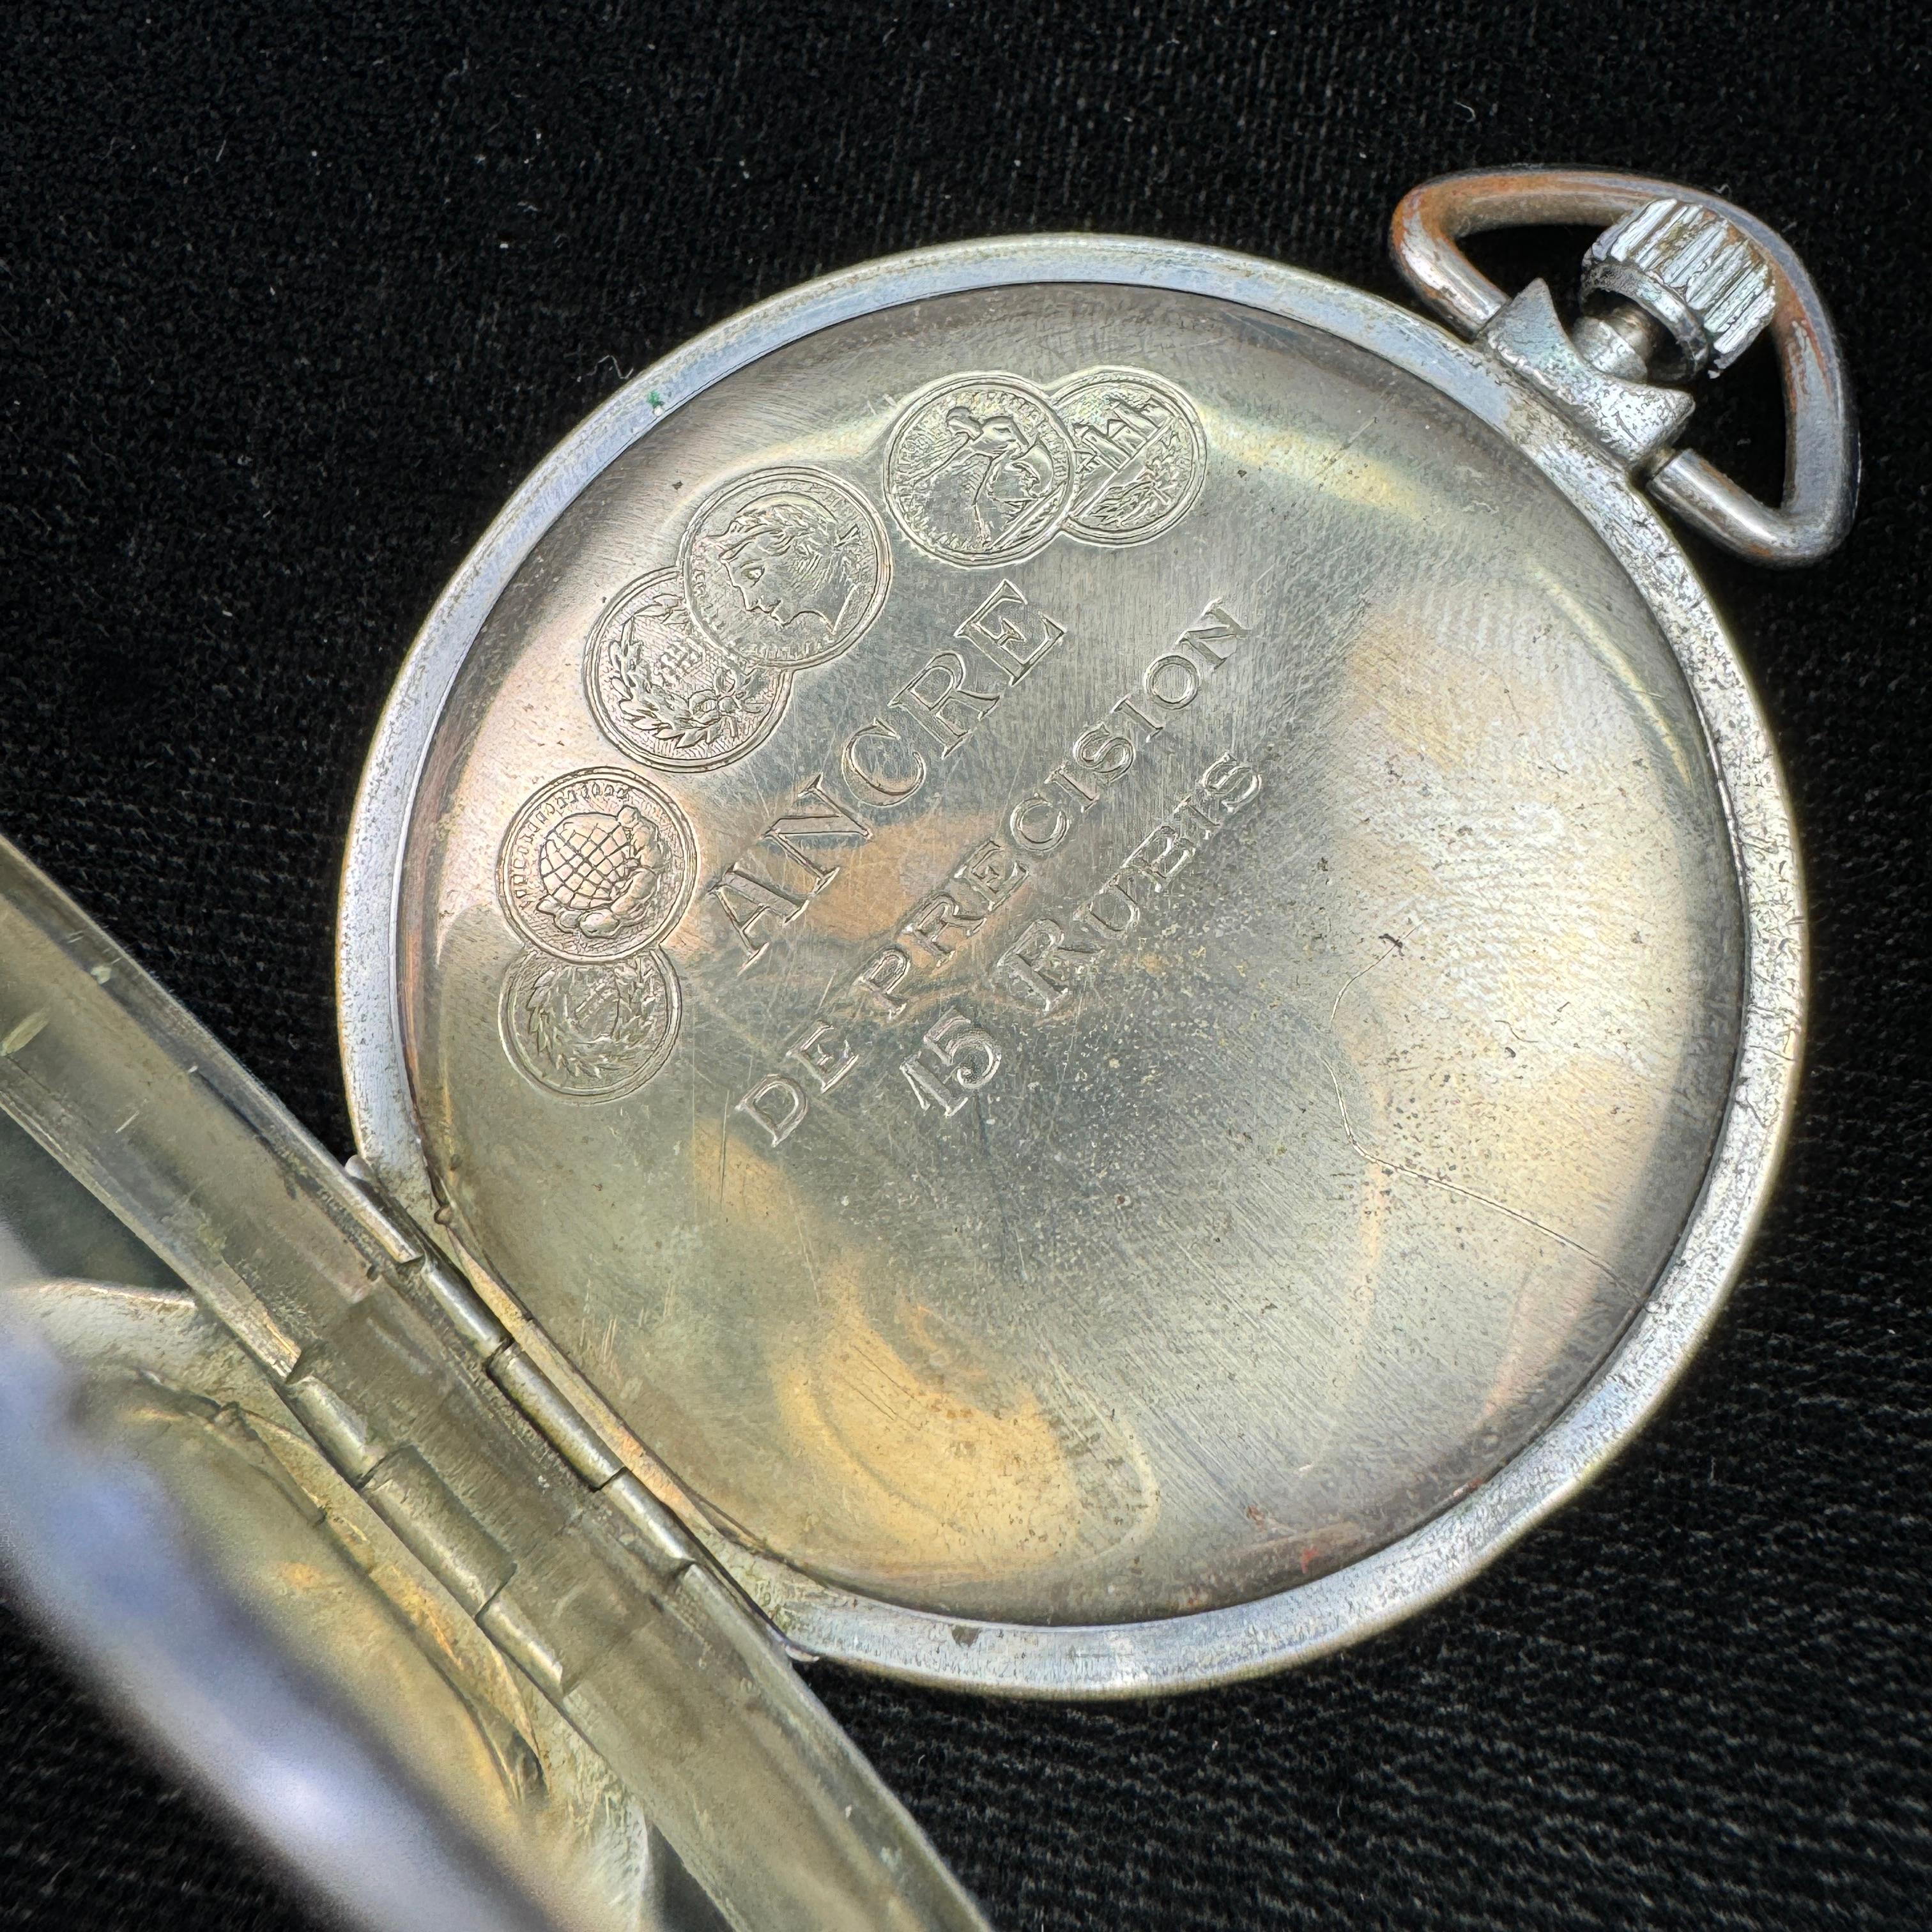 Circa 1940 15-jewel Ancre covered pocket watch